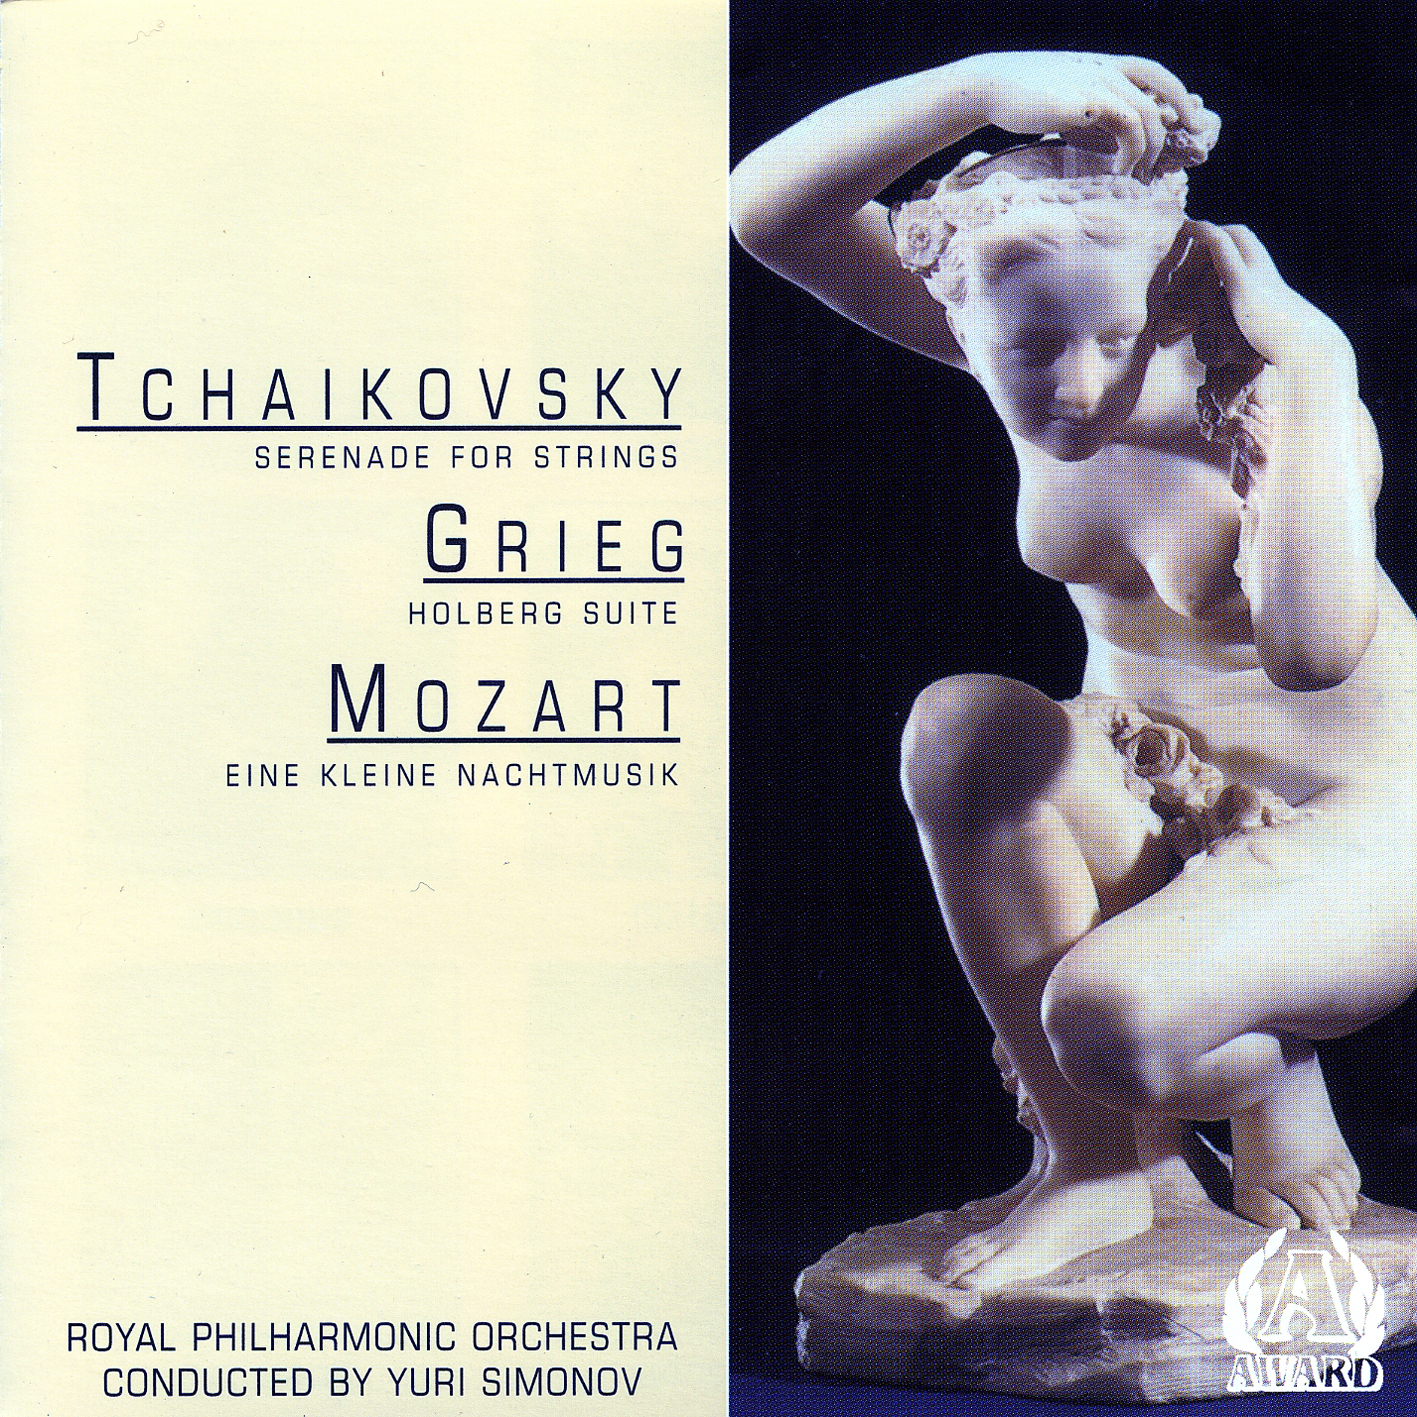 Tchaikovsky - Serenade For Strings - Waltz